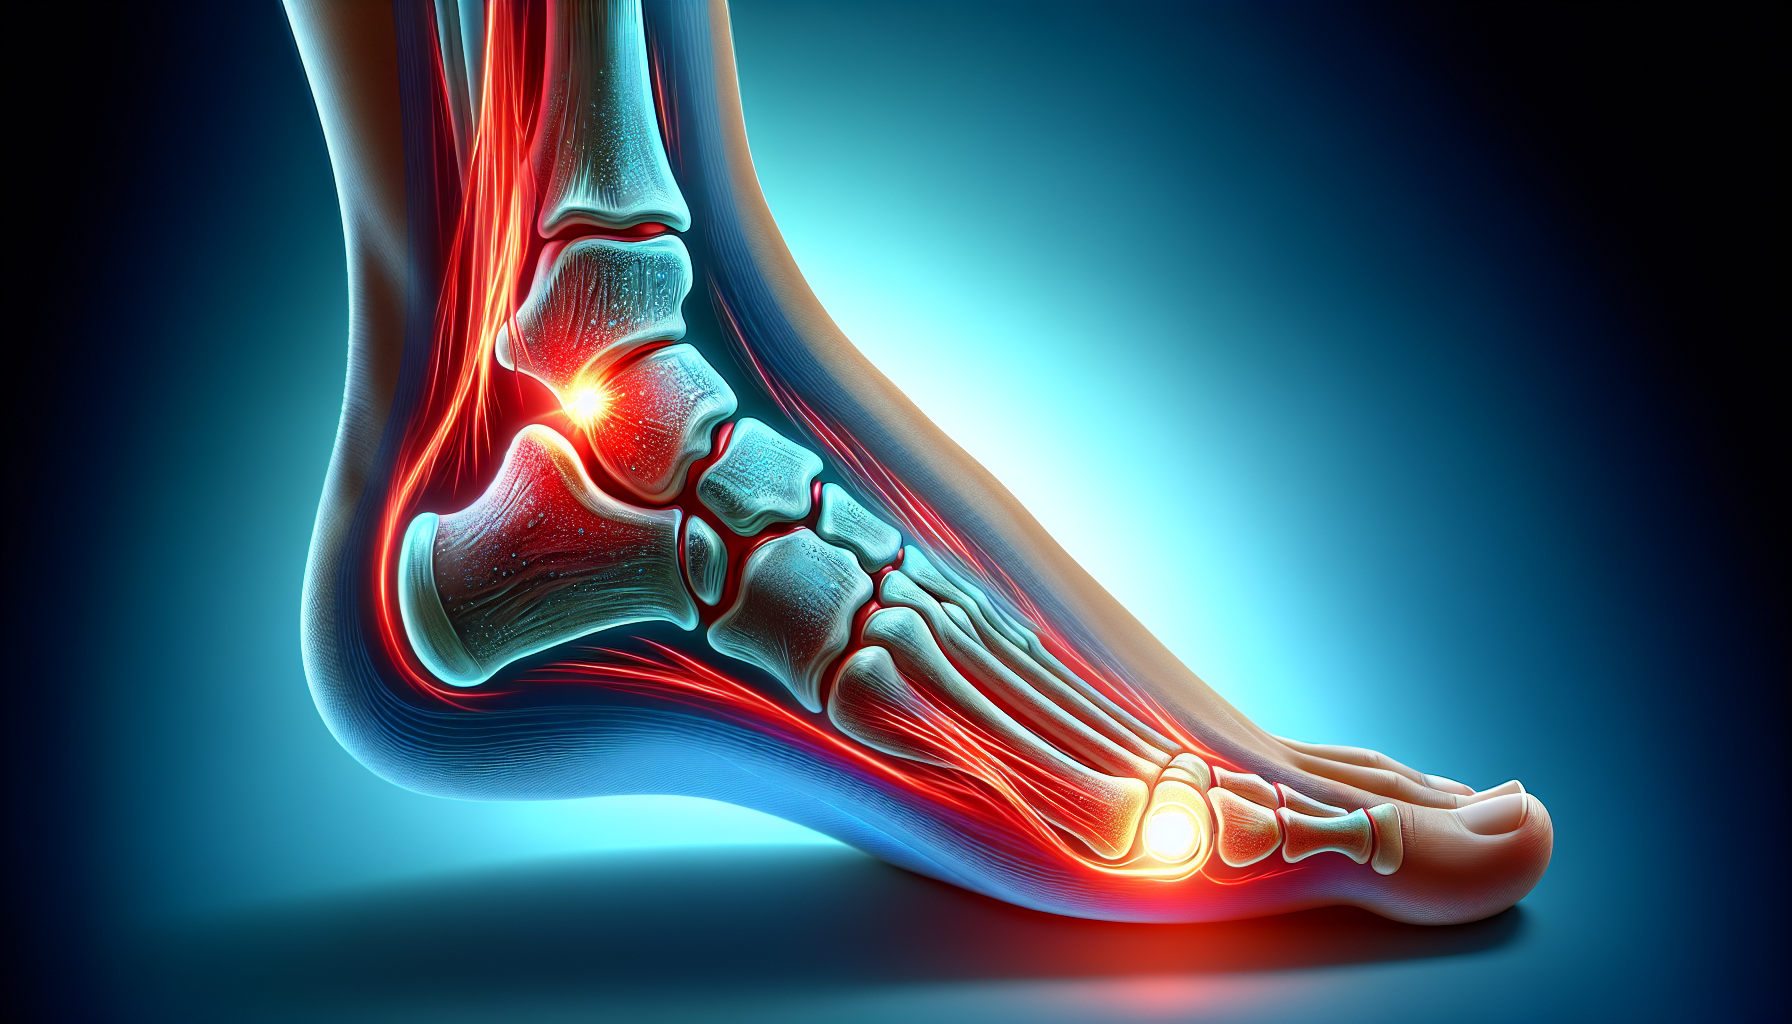 Illustration of plantar fascia and heel pain